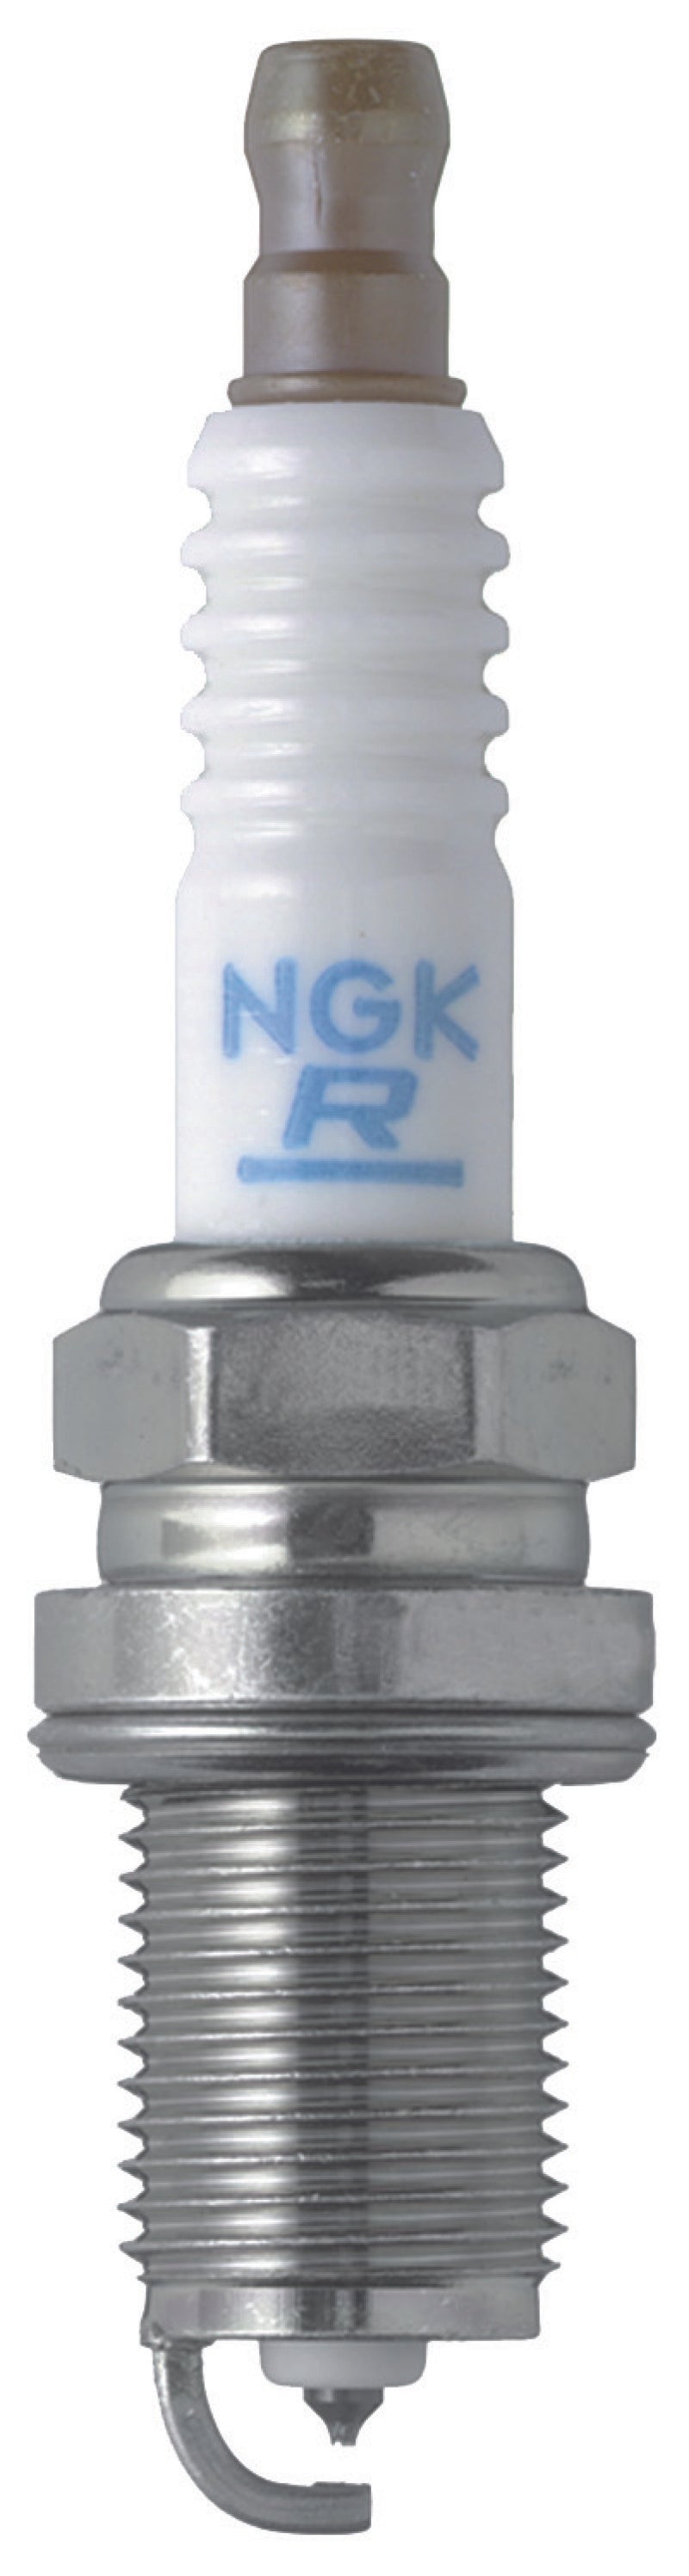 NGK Laser Platinum Spark Plug Box of 4 (PFR7Q)